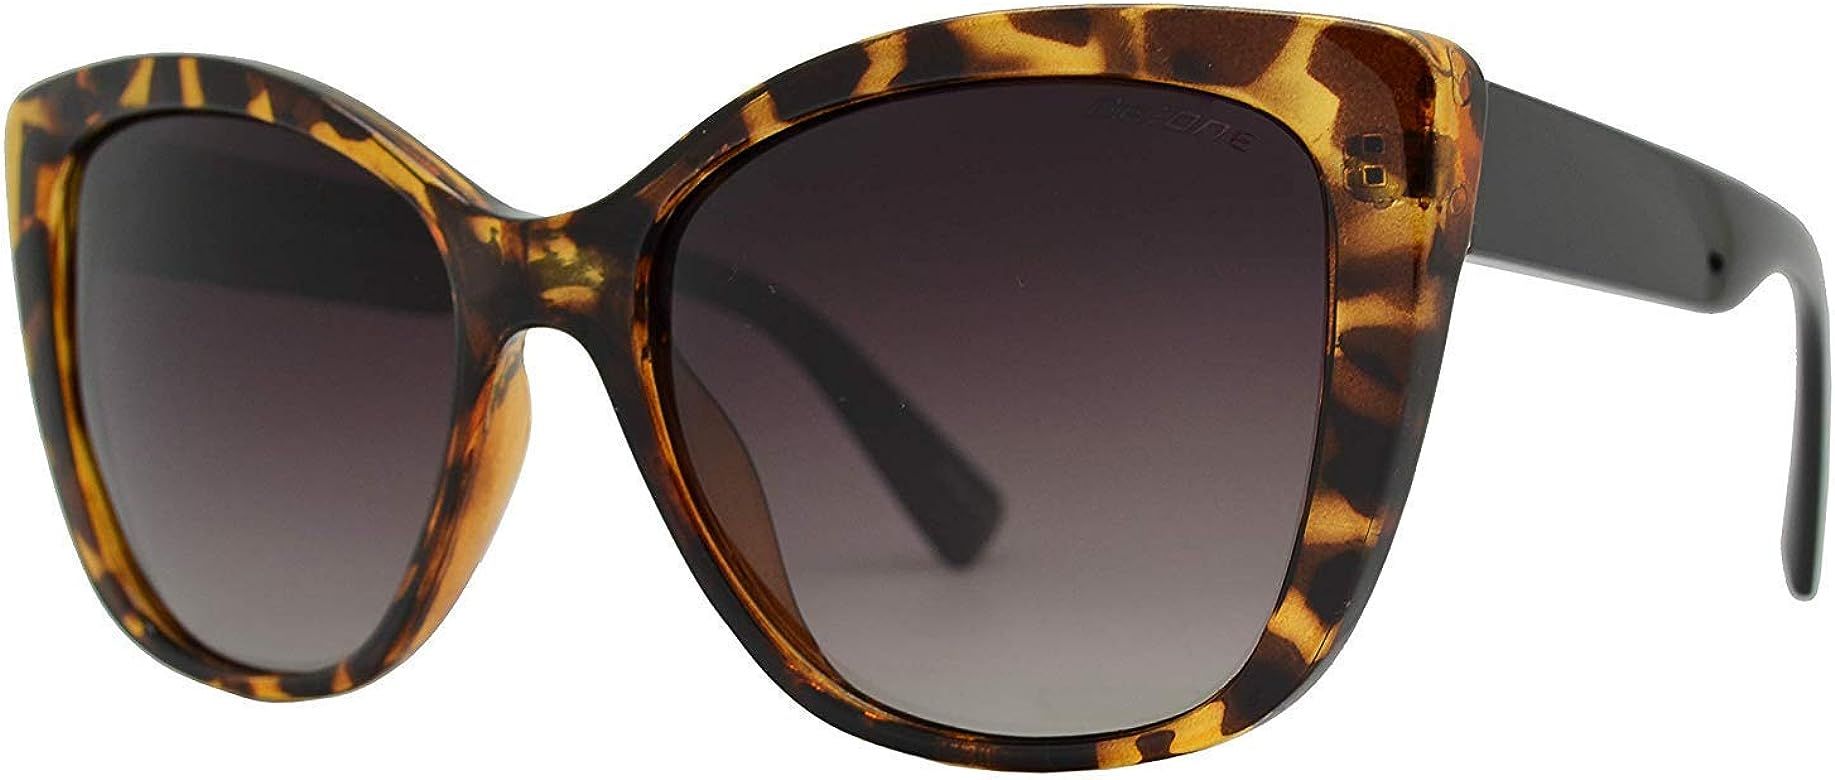 Be One Polarized Sunglasses for Women - Cat Eye Vintage Classic Retro Fashion Design UV Protection L | Amazon (US)